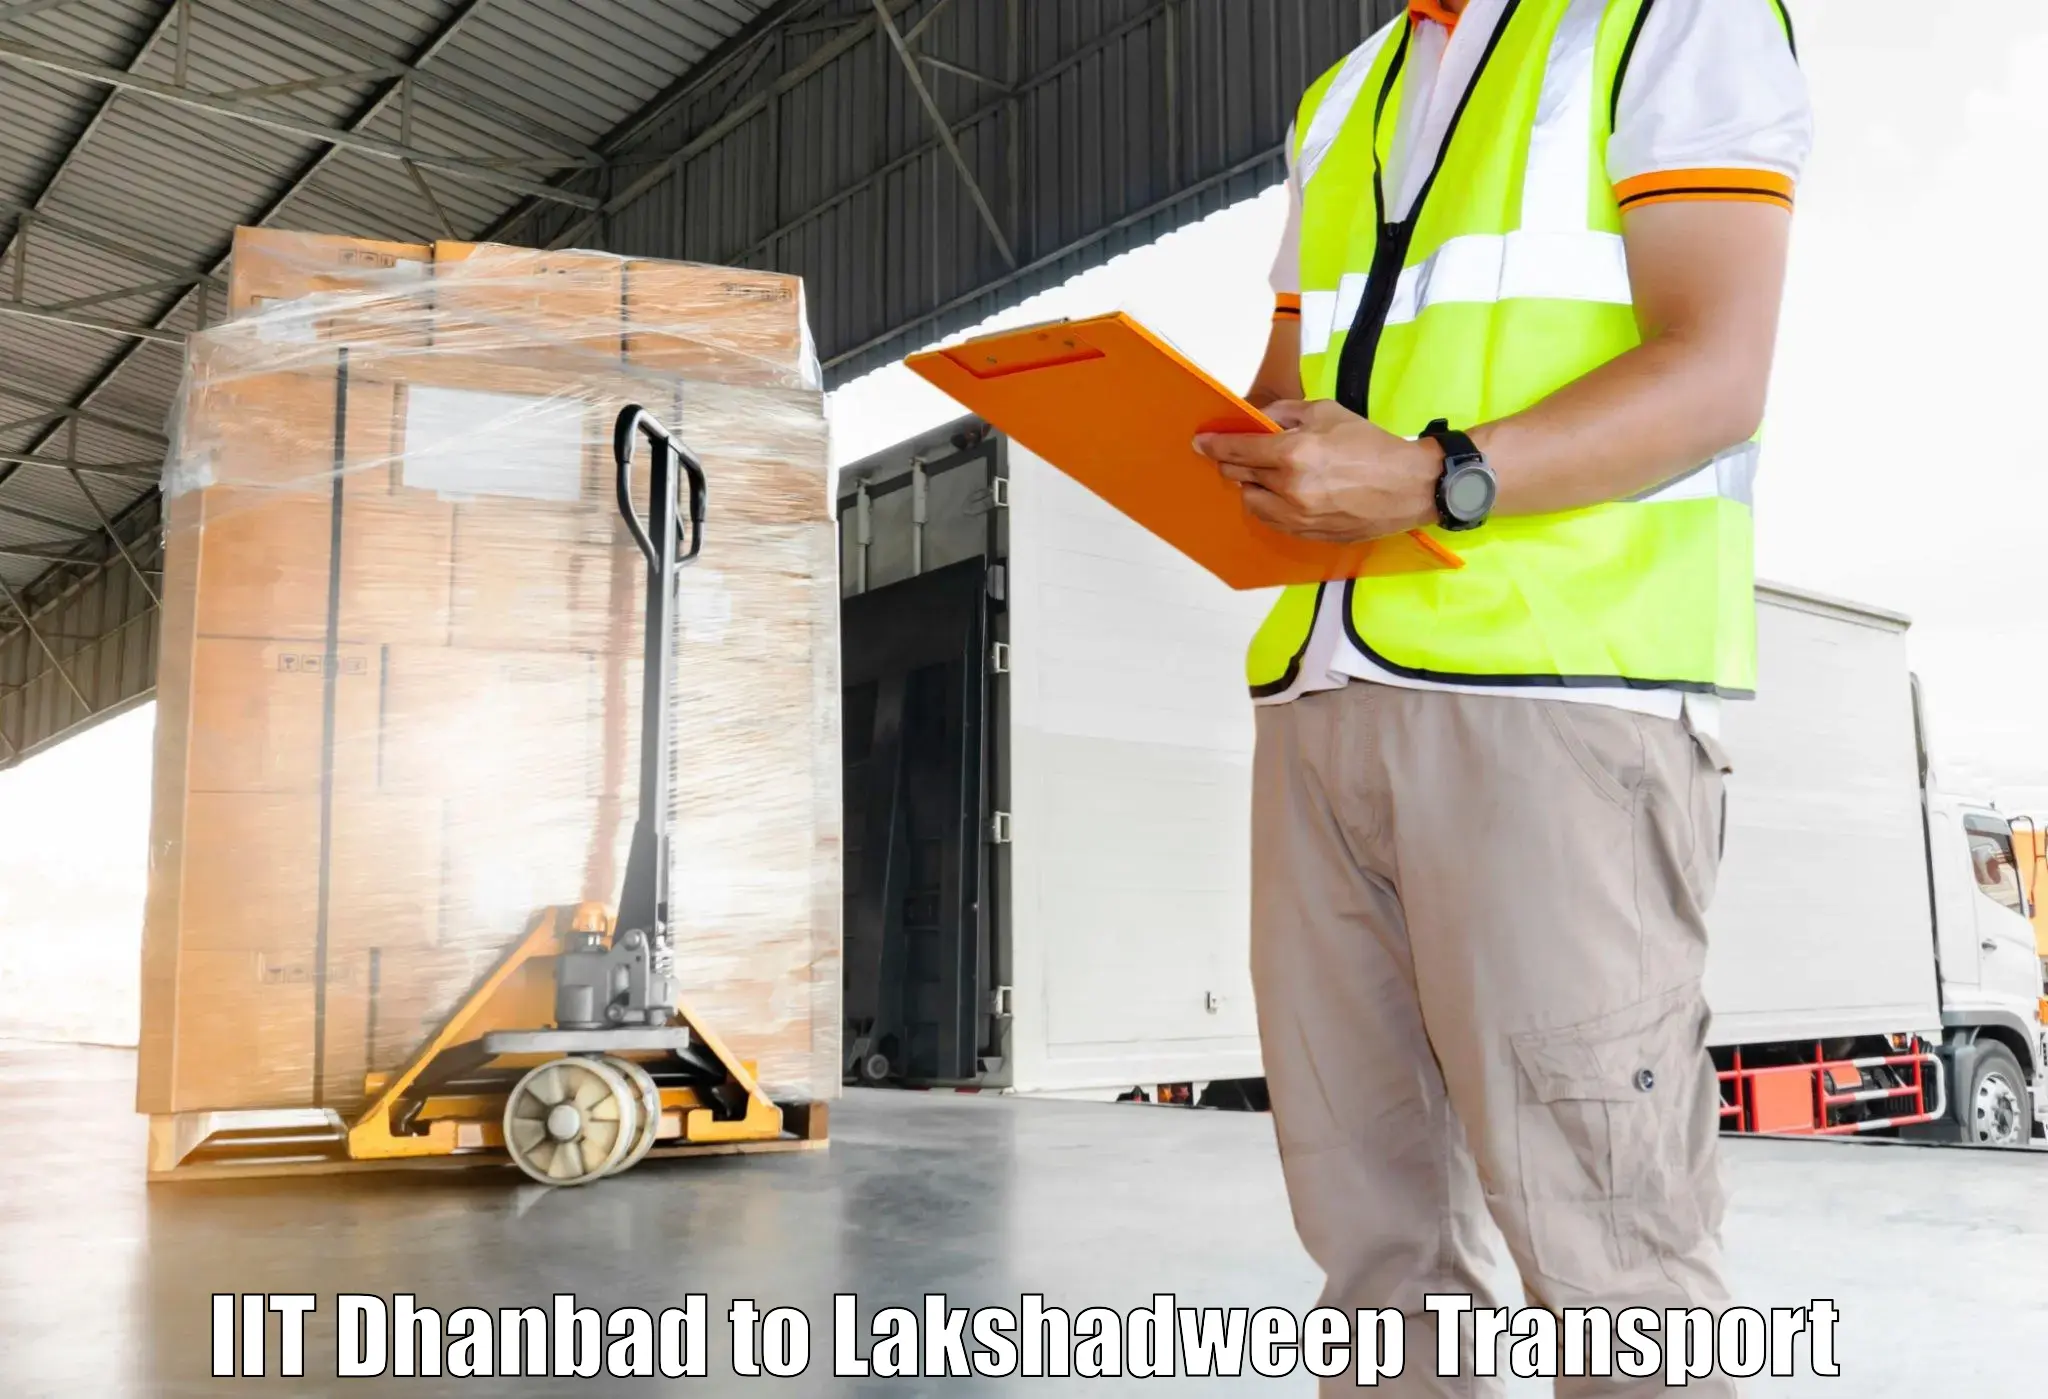 Cycle transportation service IIT Dhanbad to Lakshadweep